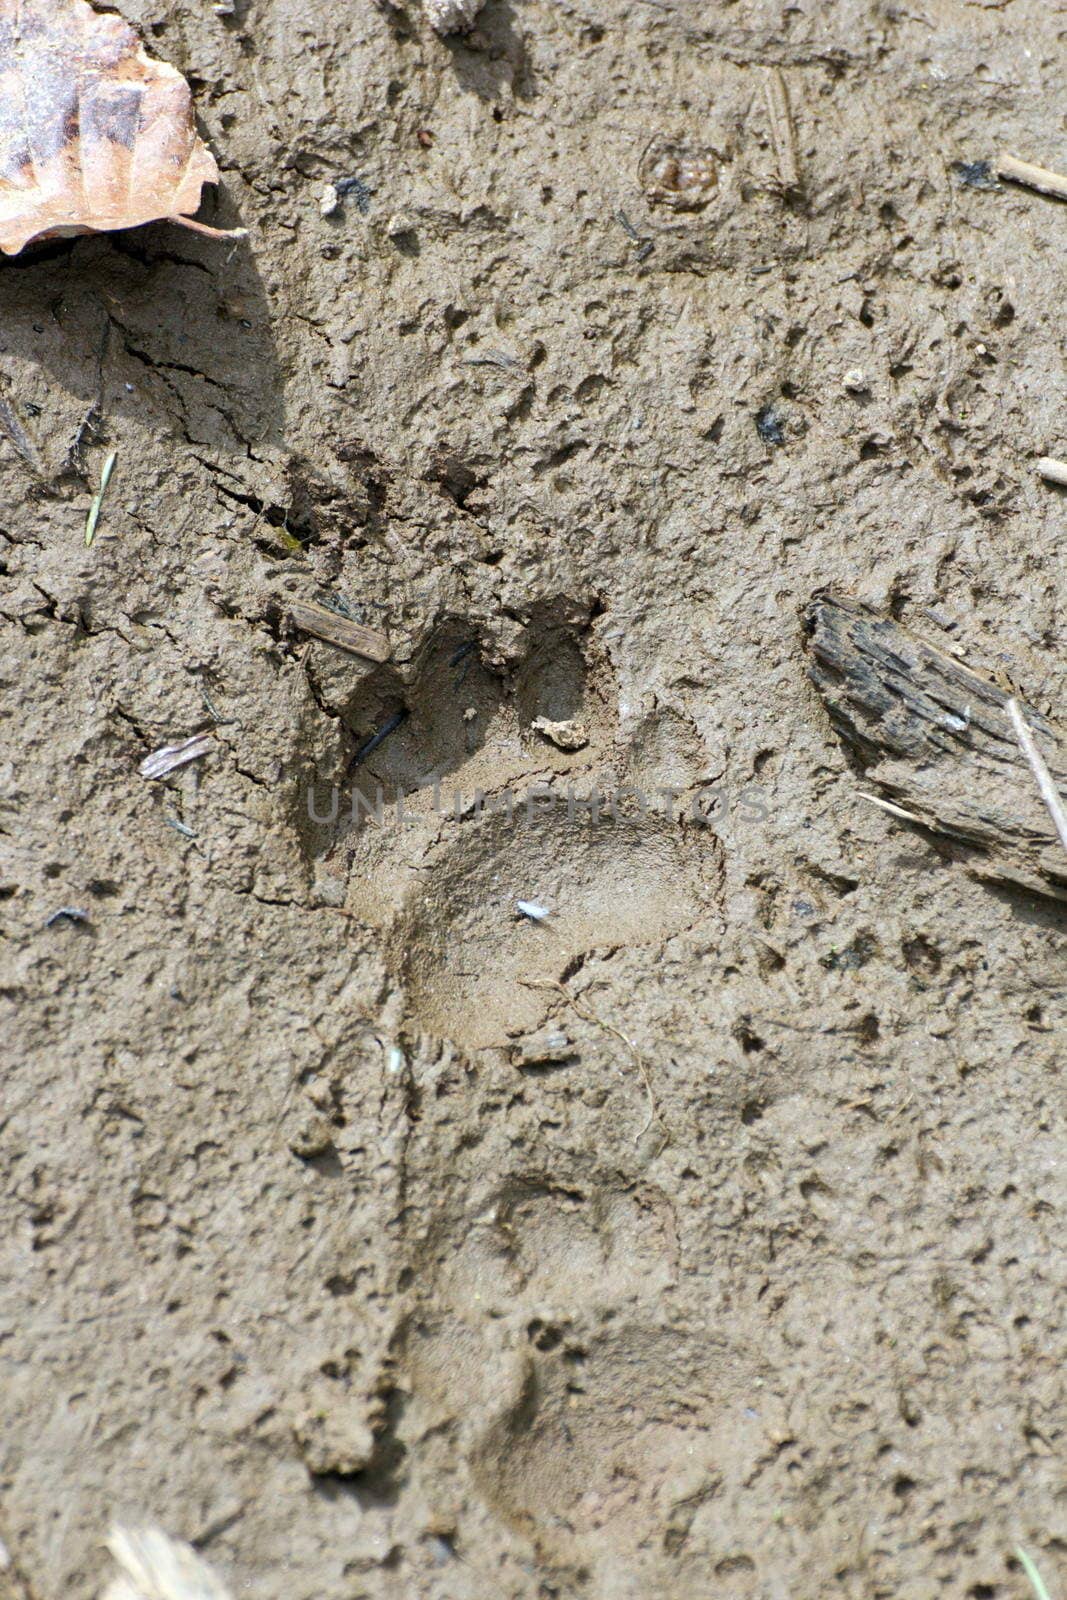 european badger ( meles meles ) footprint in the muddy soil